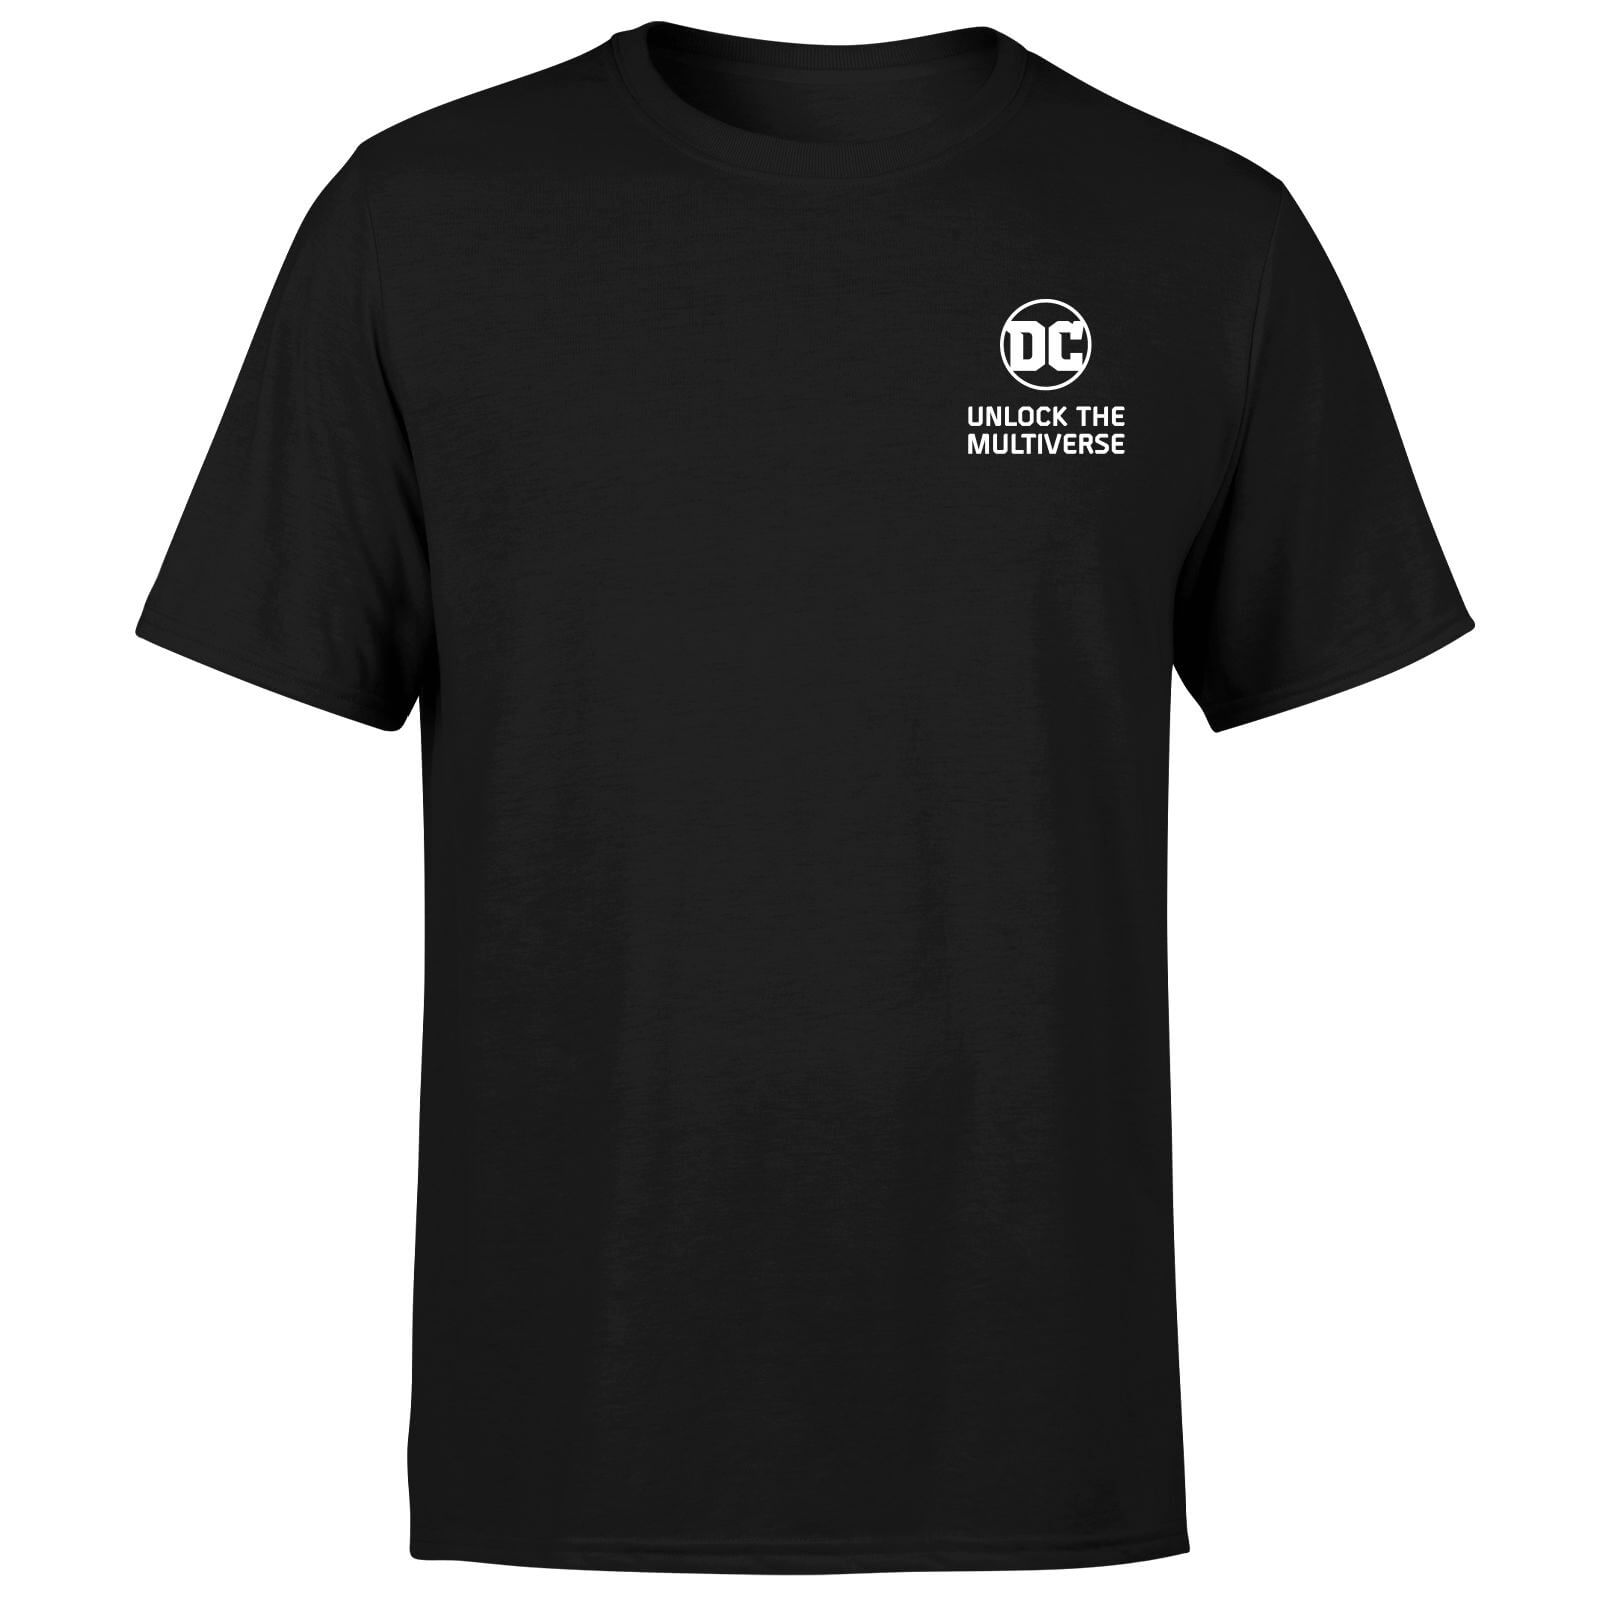 HRO X DC Men's T-Shirt - Black - XL - Black